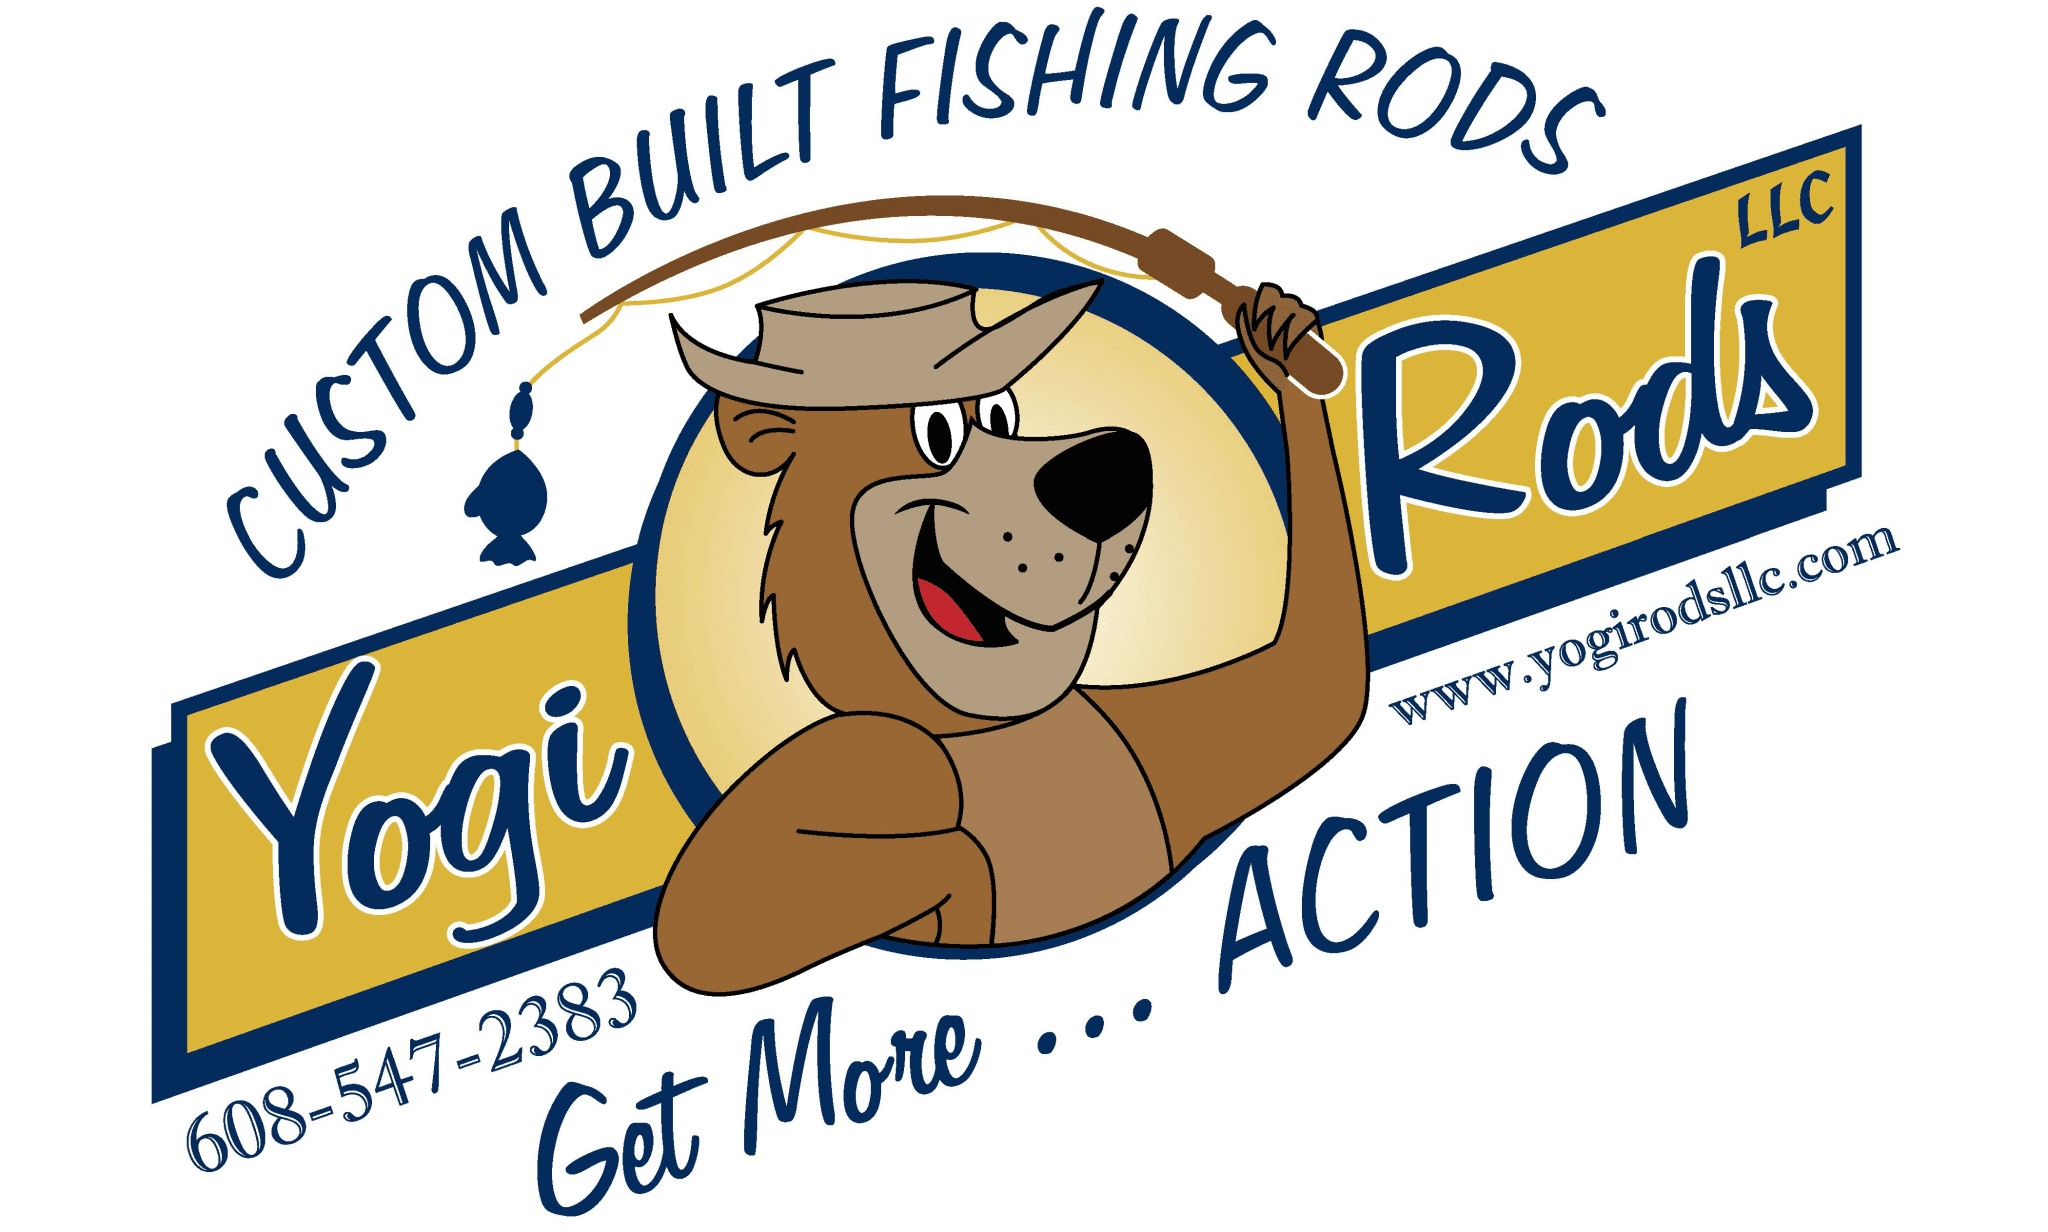 CUSTOM BASS BAIT CASTING ROD - Yogi Rods LLC